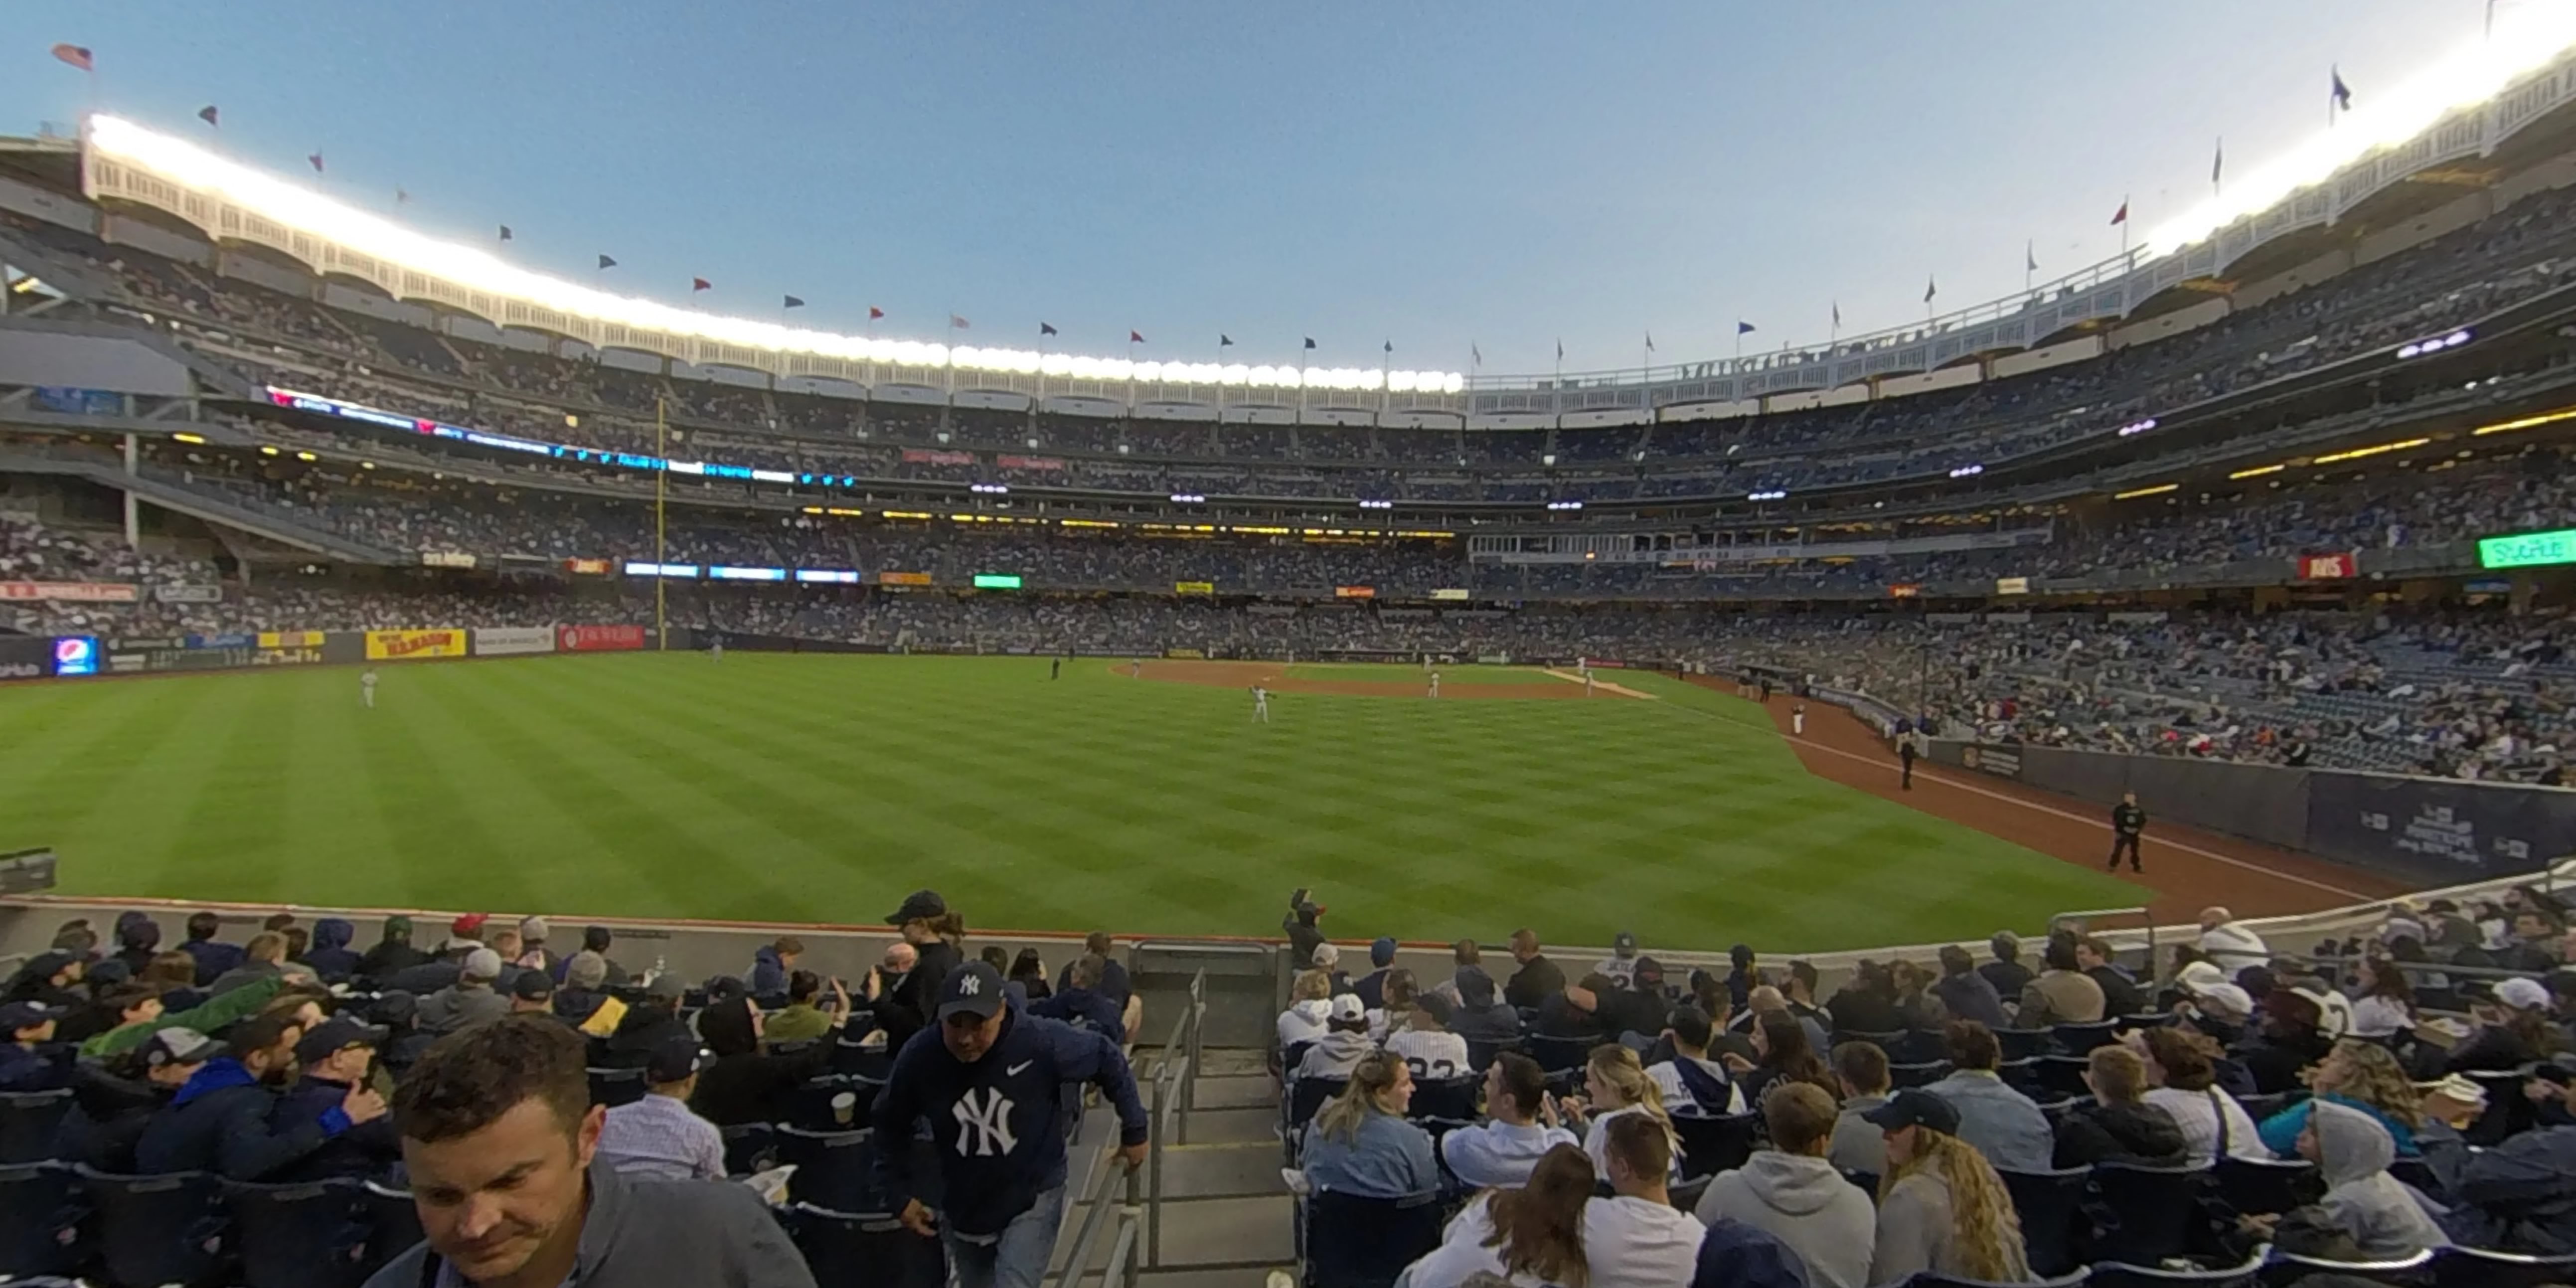 section 134 panoramic seat view  for baseball - yankee stadium